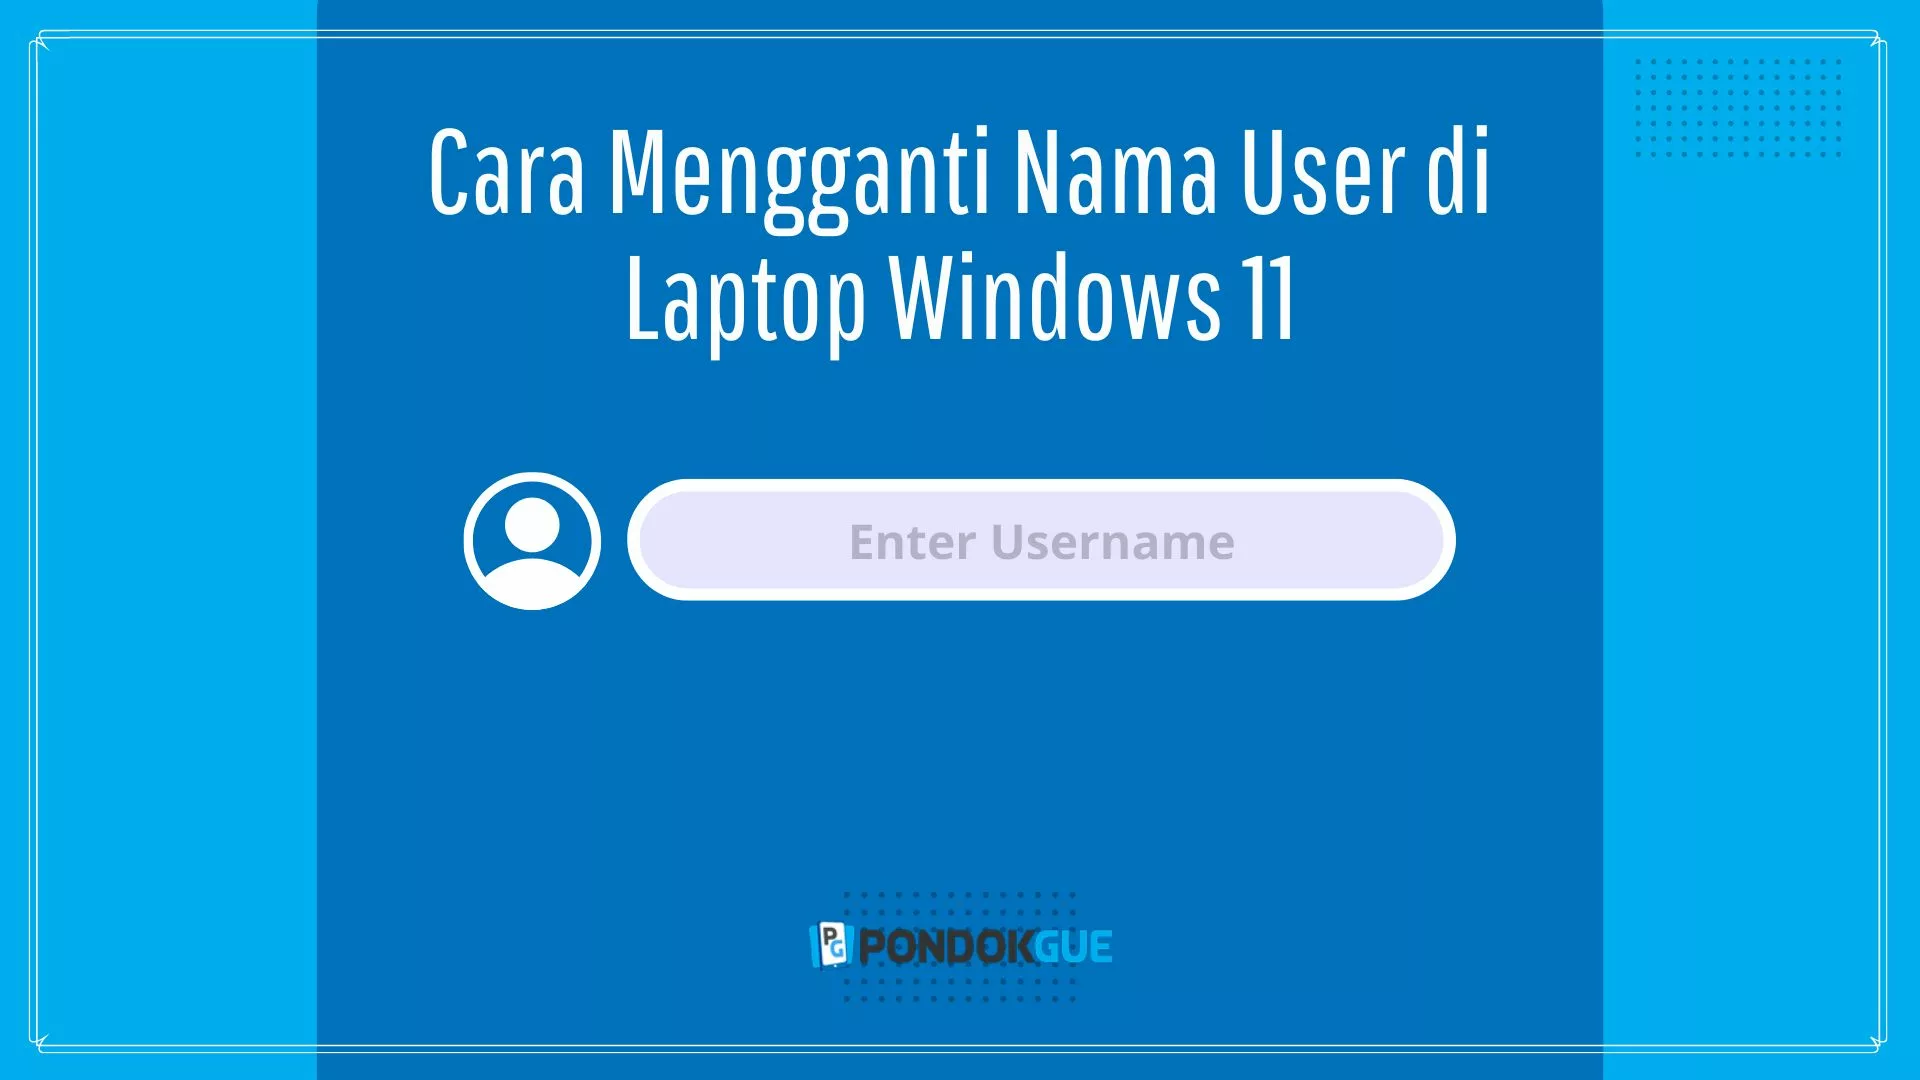 Cara Mengganti Nama User di Laptop Windows 11 - Pondokgue.com